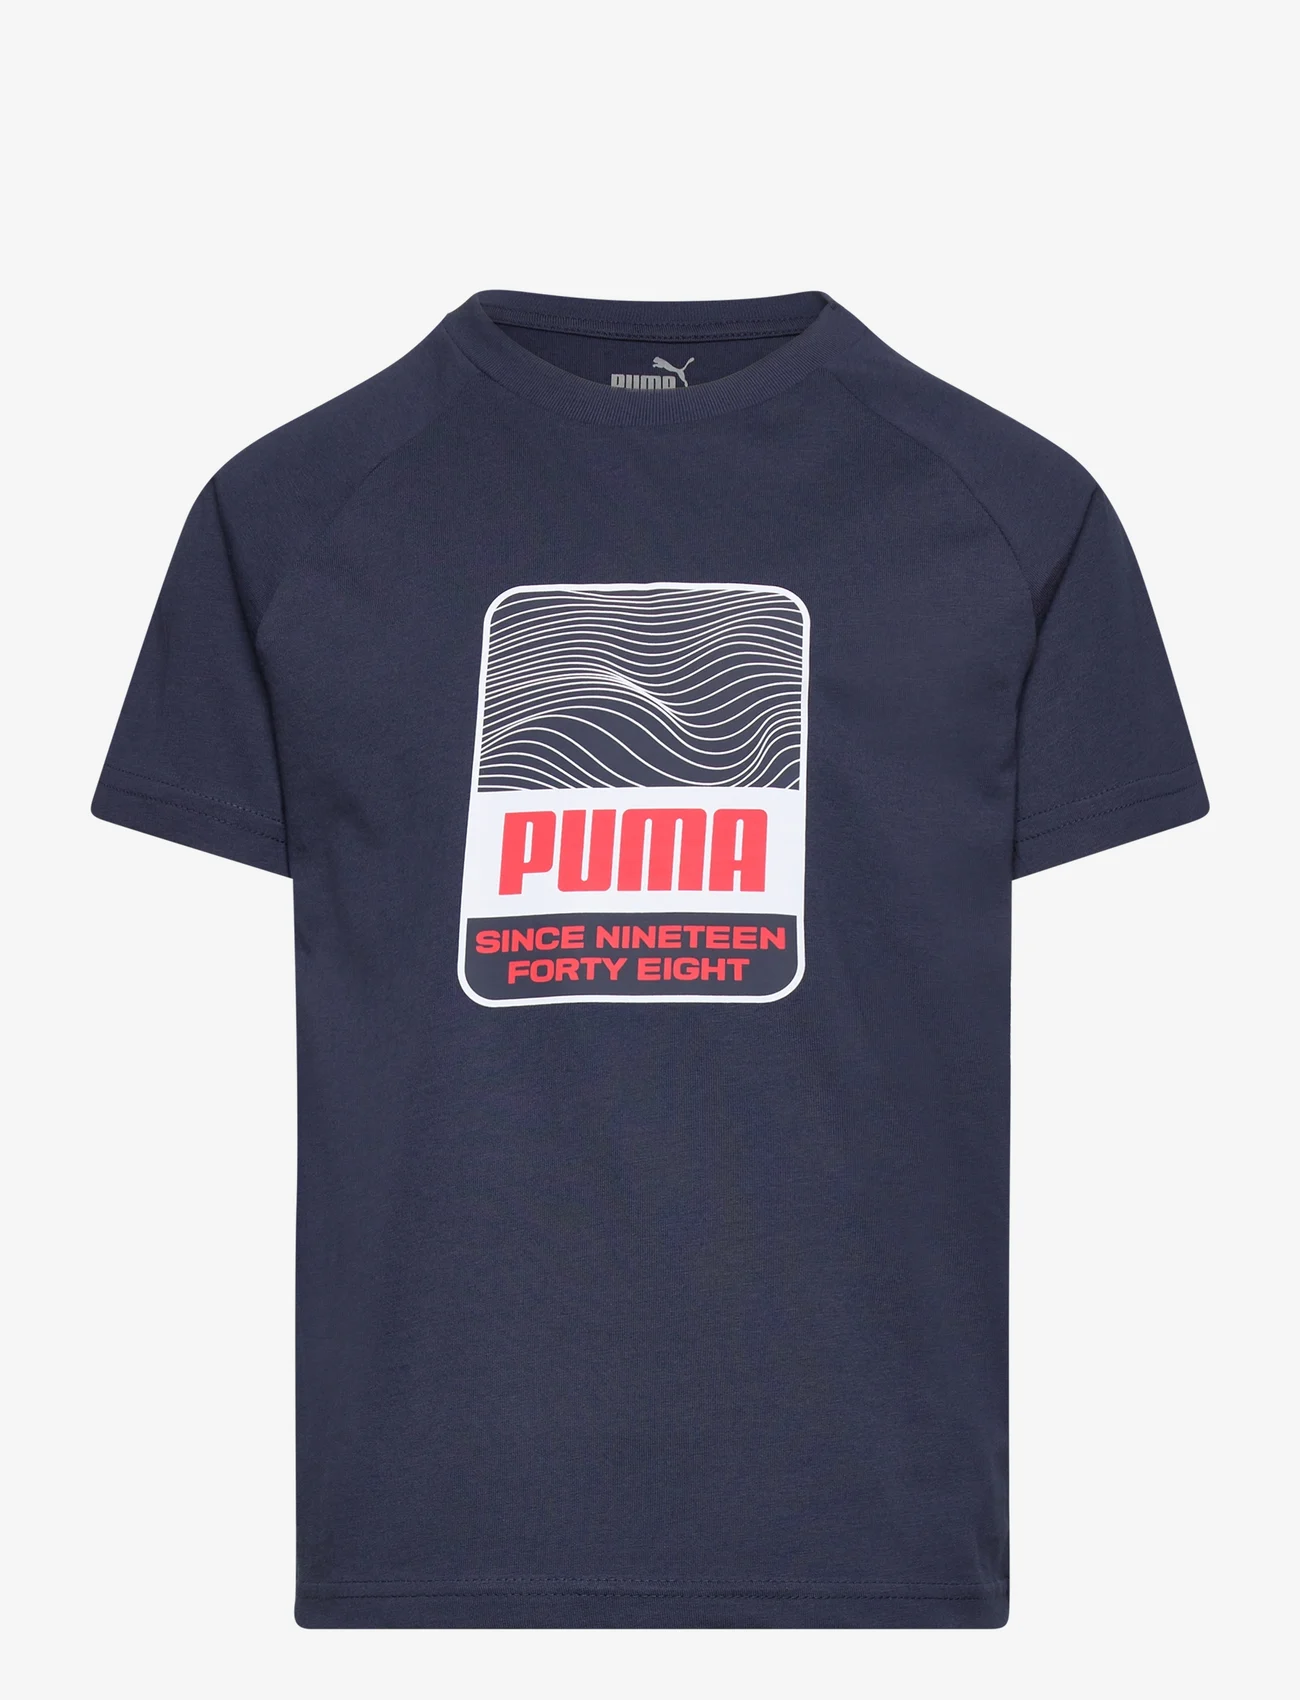 PUMA - ACTIVE SPORTS Graphic Tee B - short-sleeved t-shirts - club navy - 0